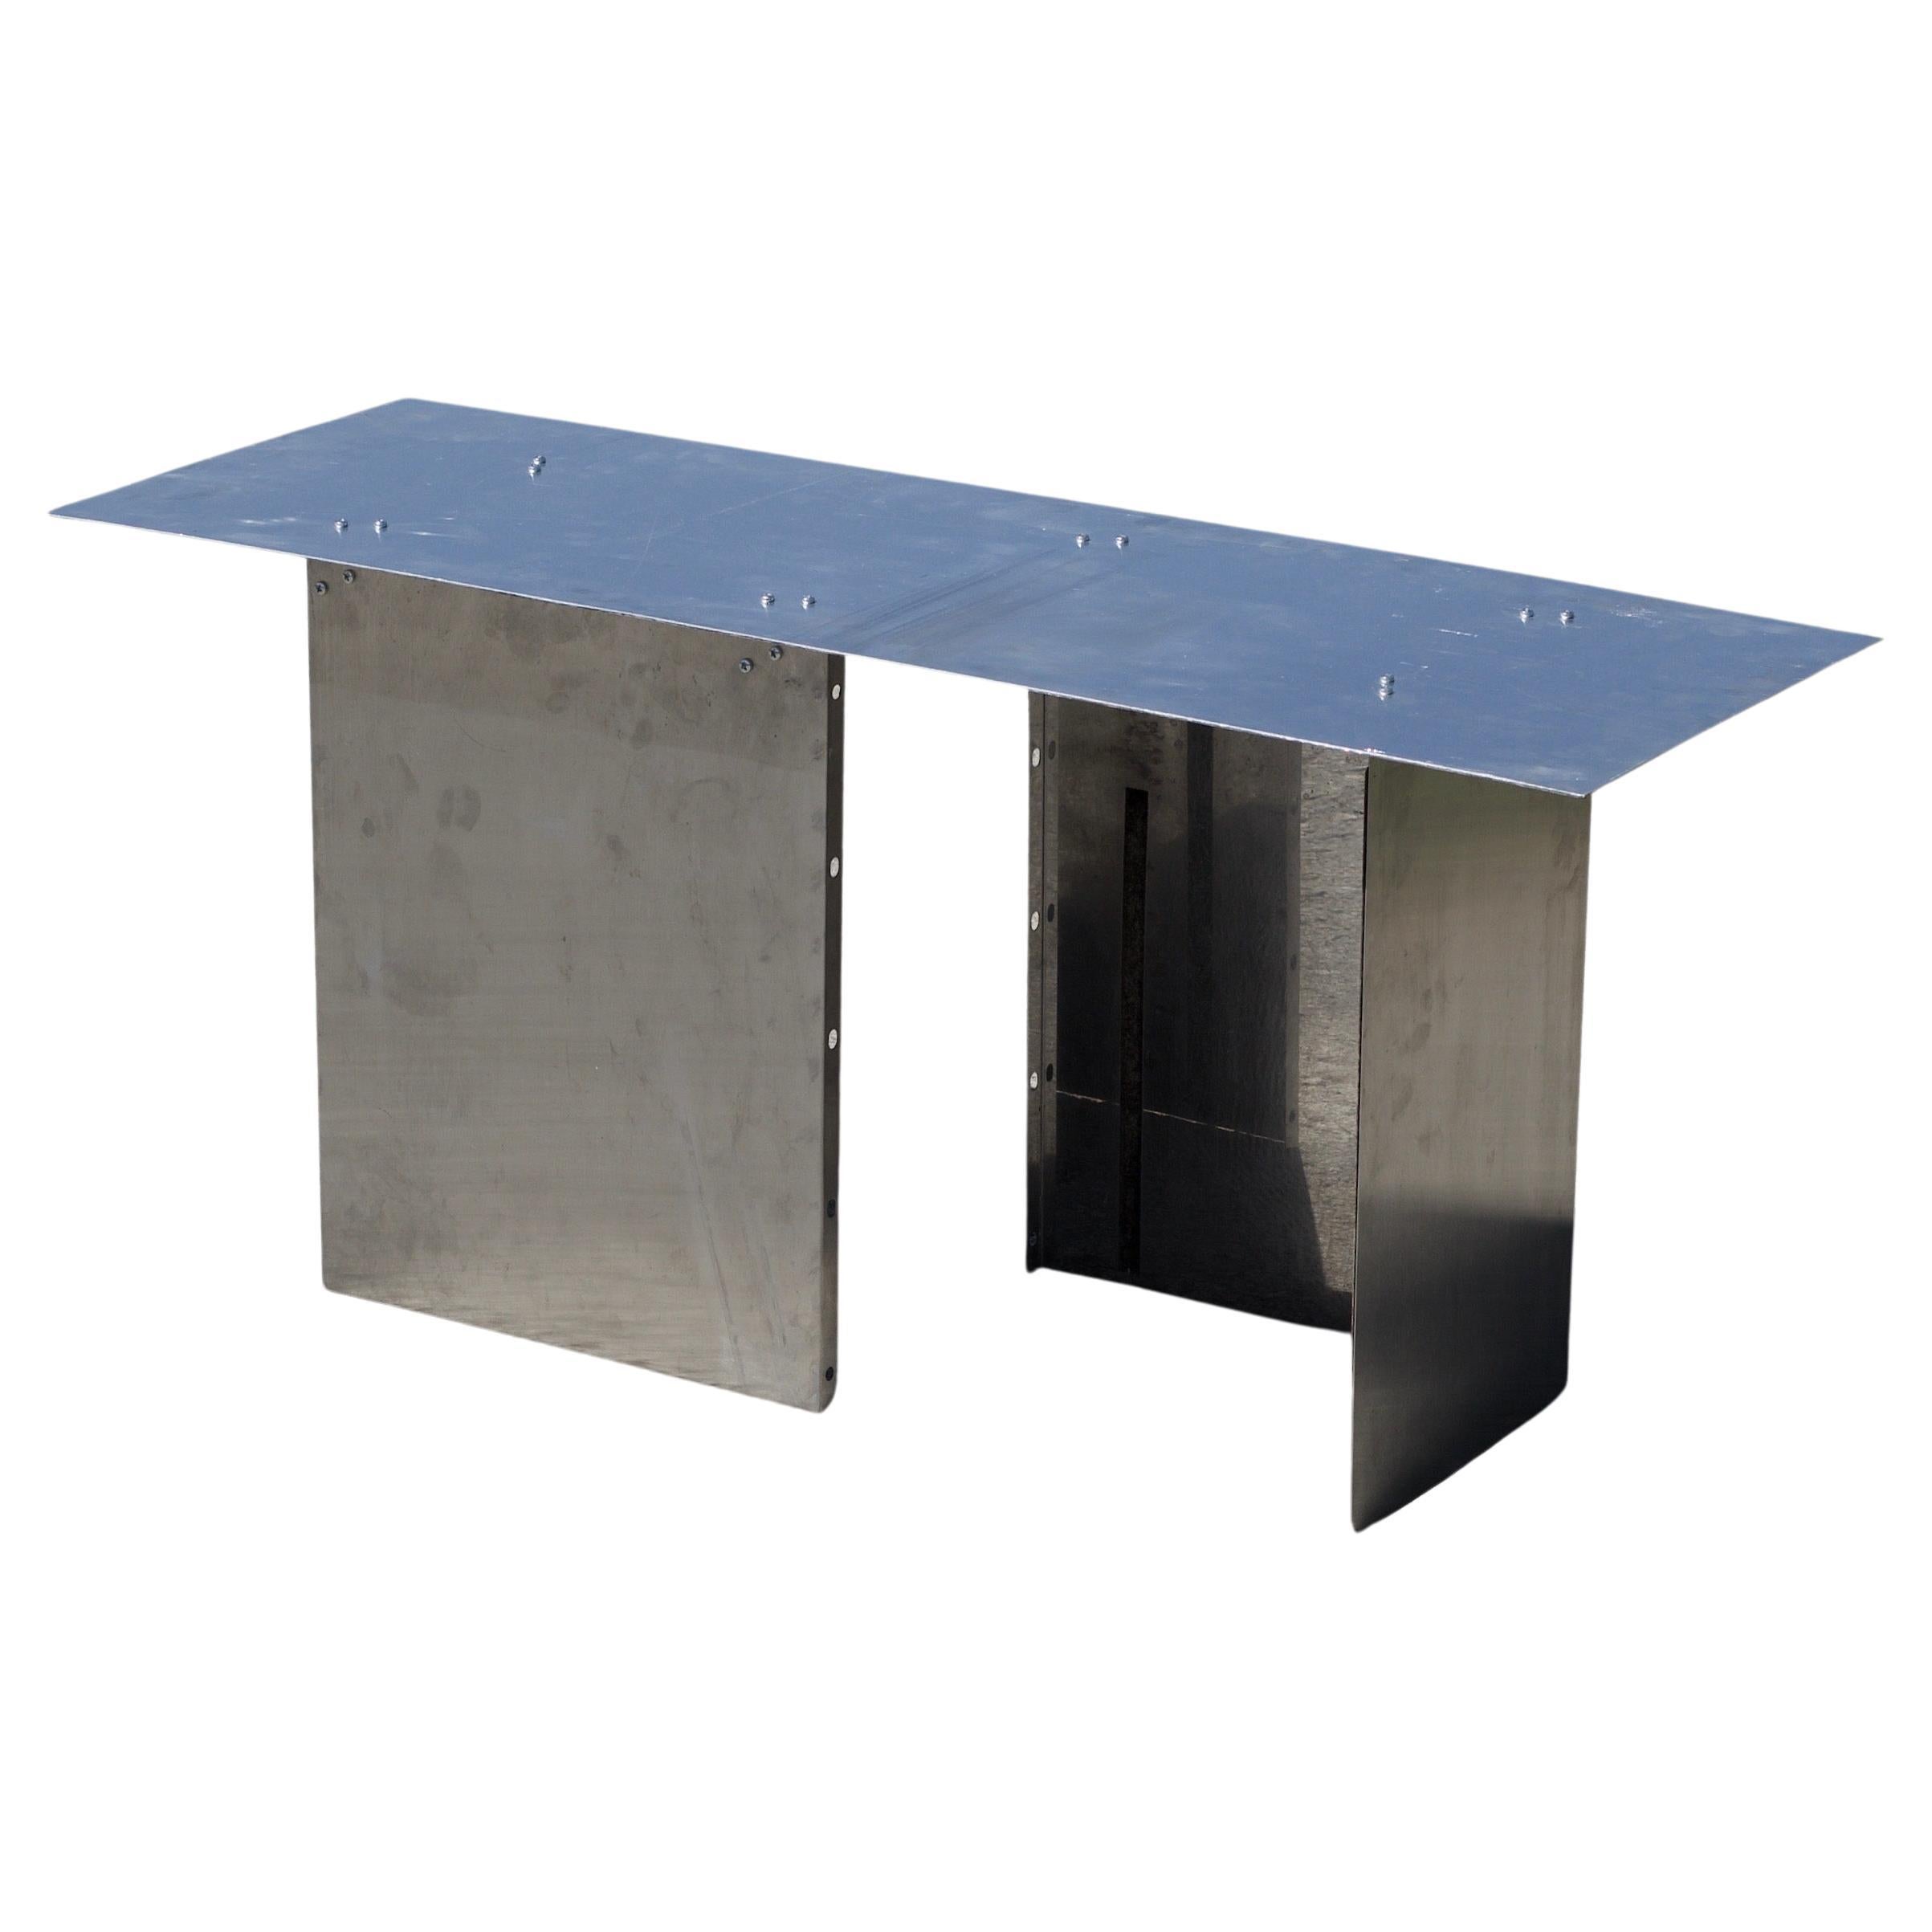 ‘S0-2h’ Lounge Table by Maximilian Hofmann For Sale